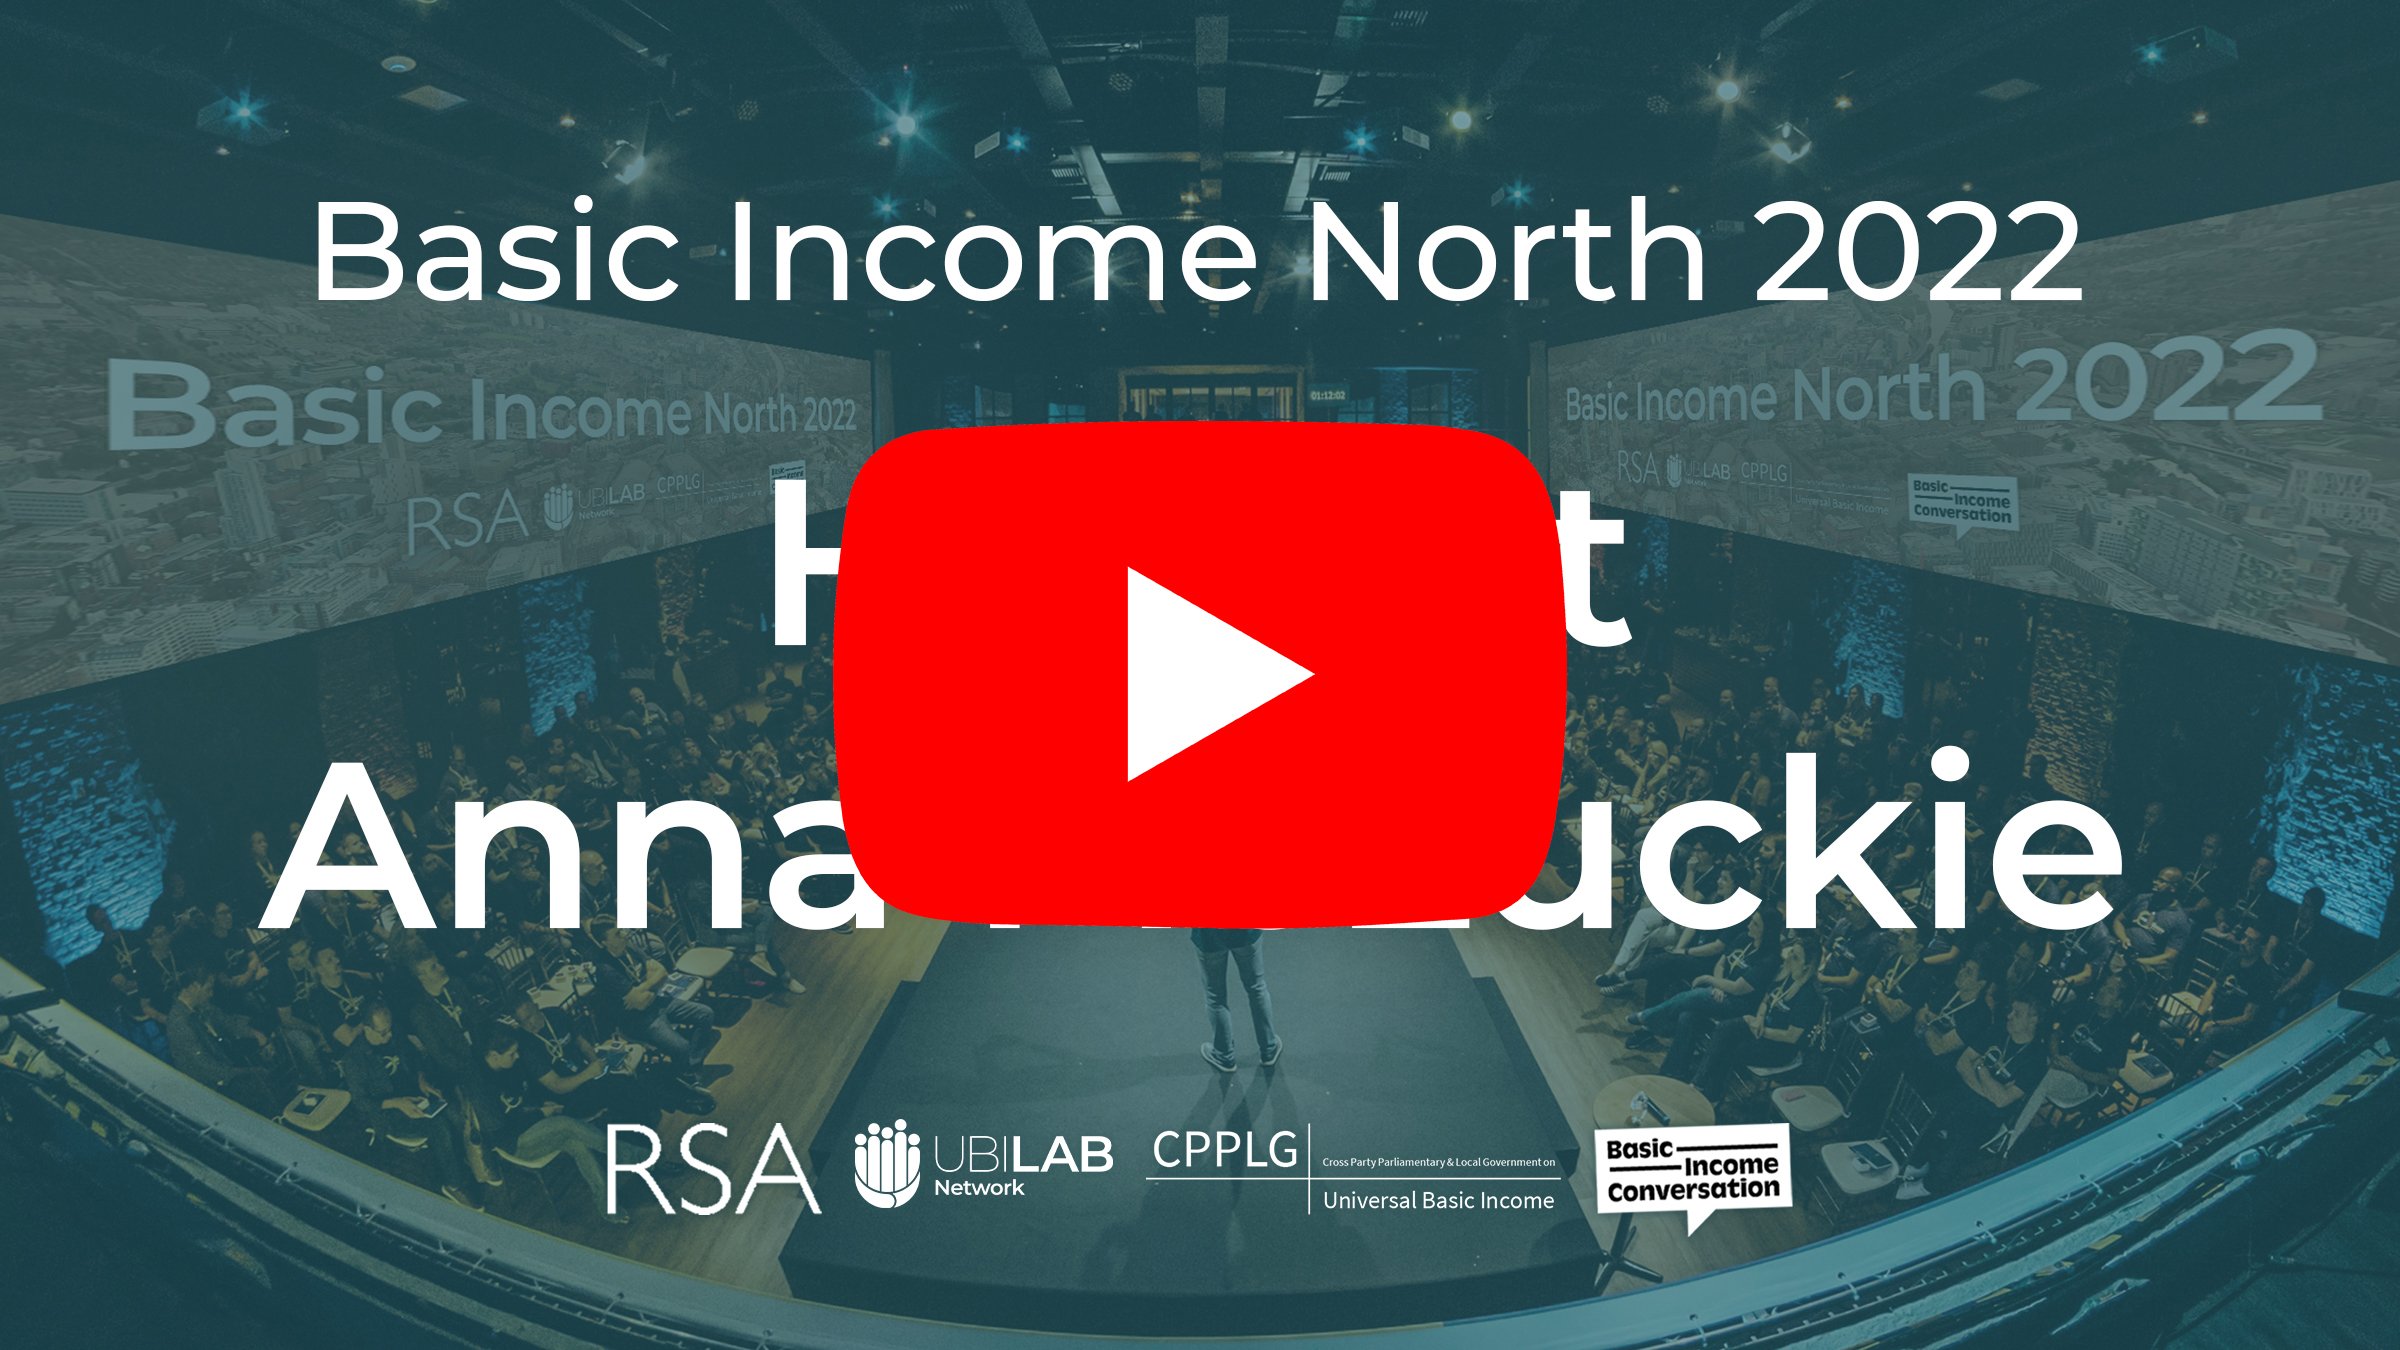 22-07-28e Basic Income North 22 - Harpist Anna McLuckie.jpg